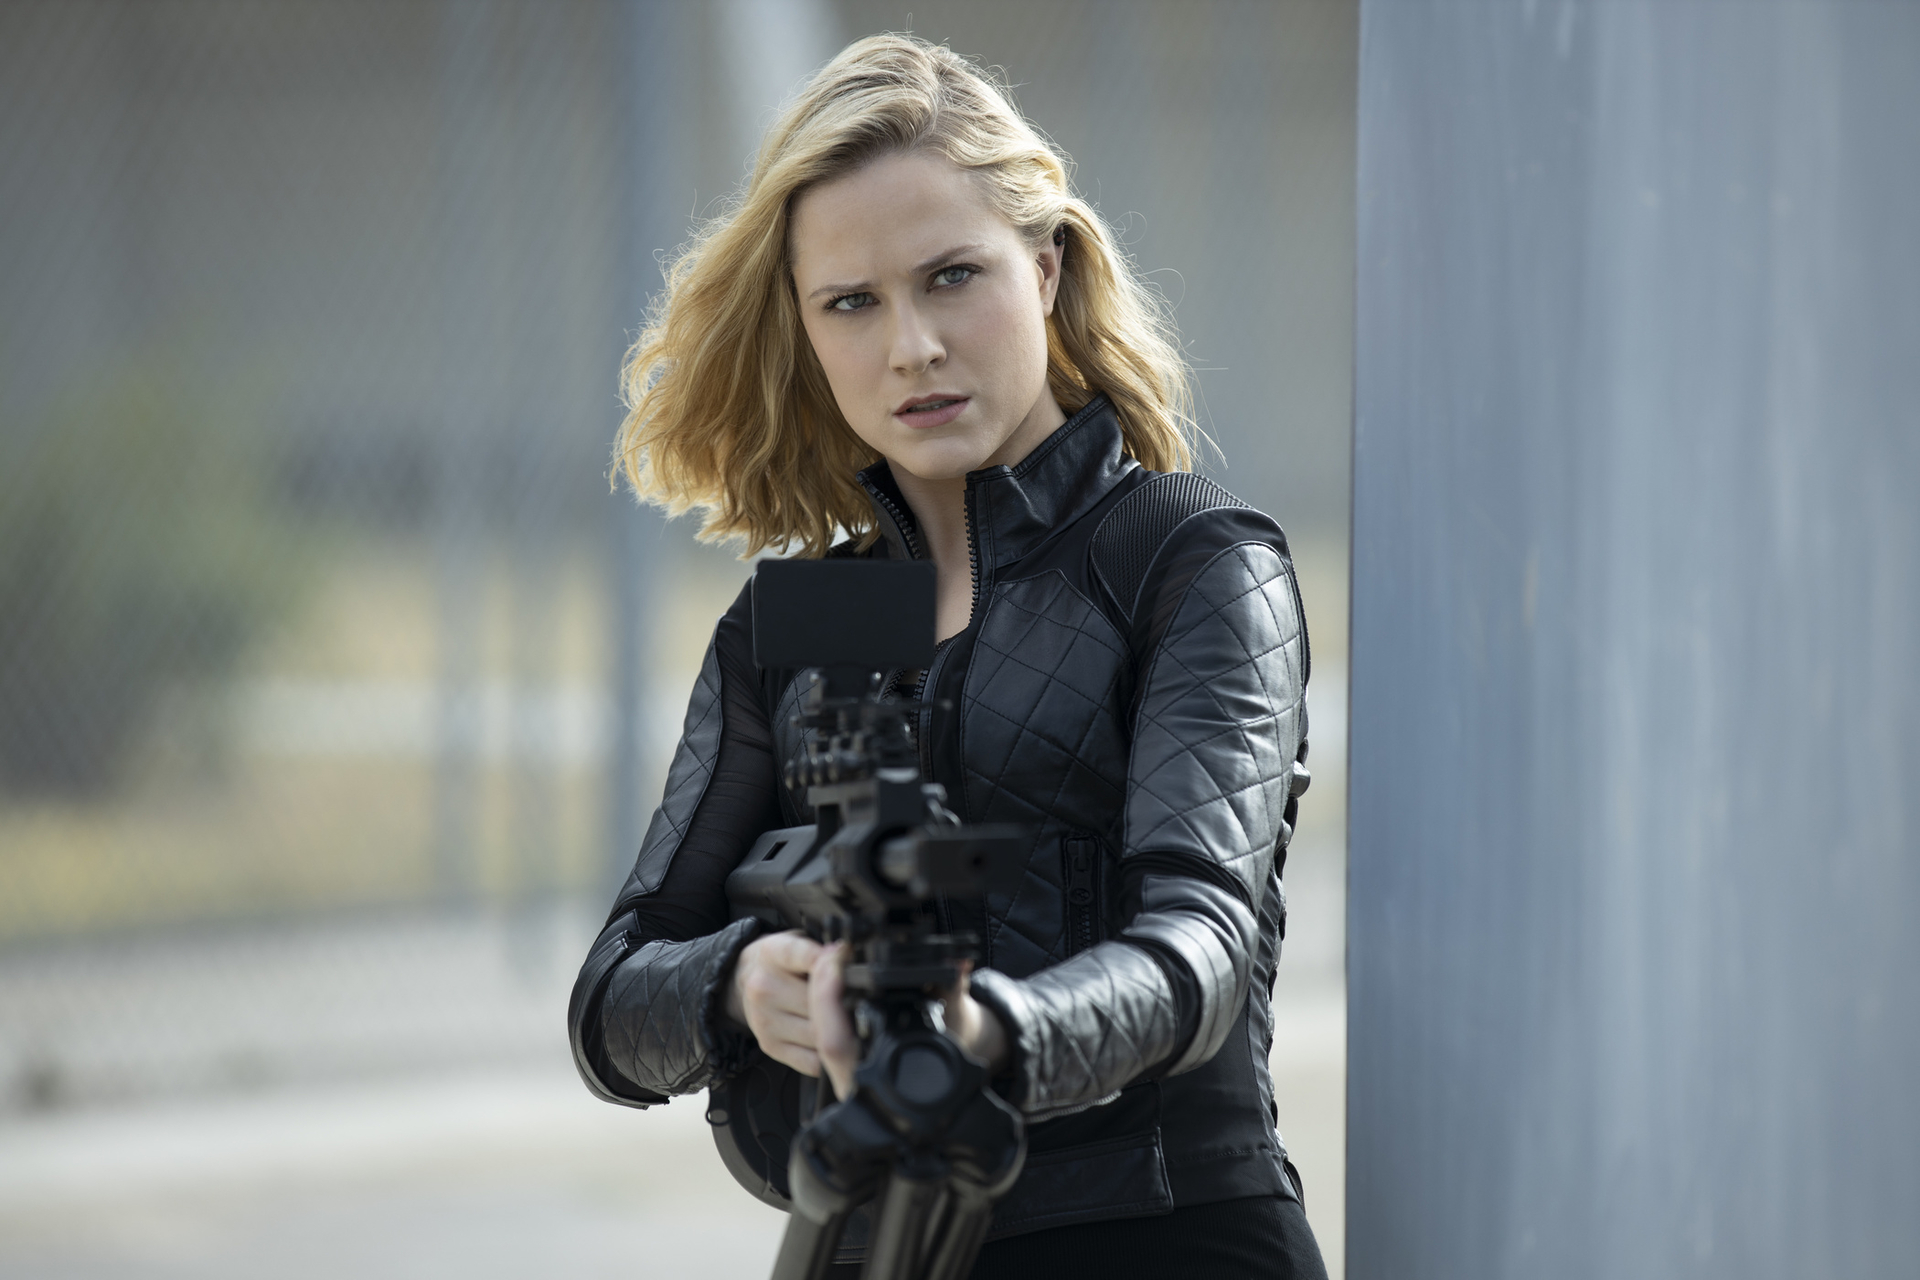 Evan Rachel Wood as Dolores Abernathy holding a sniper rifle in Westworld season 3.